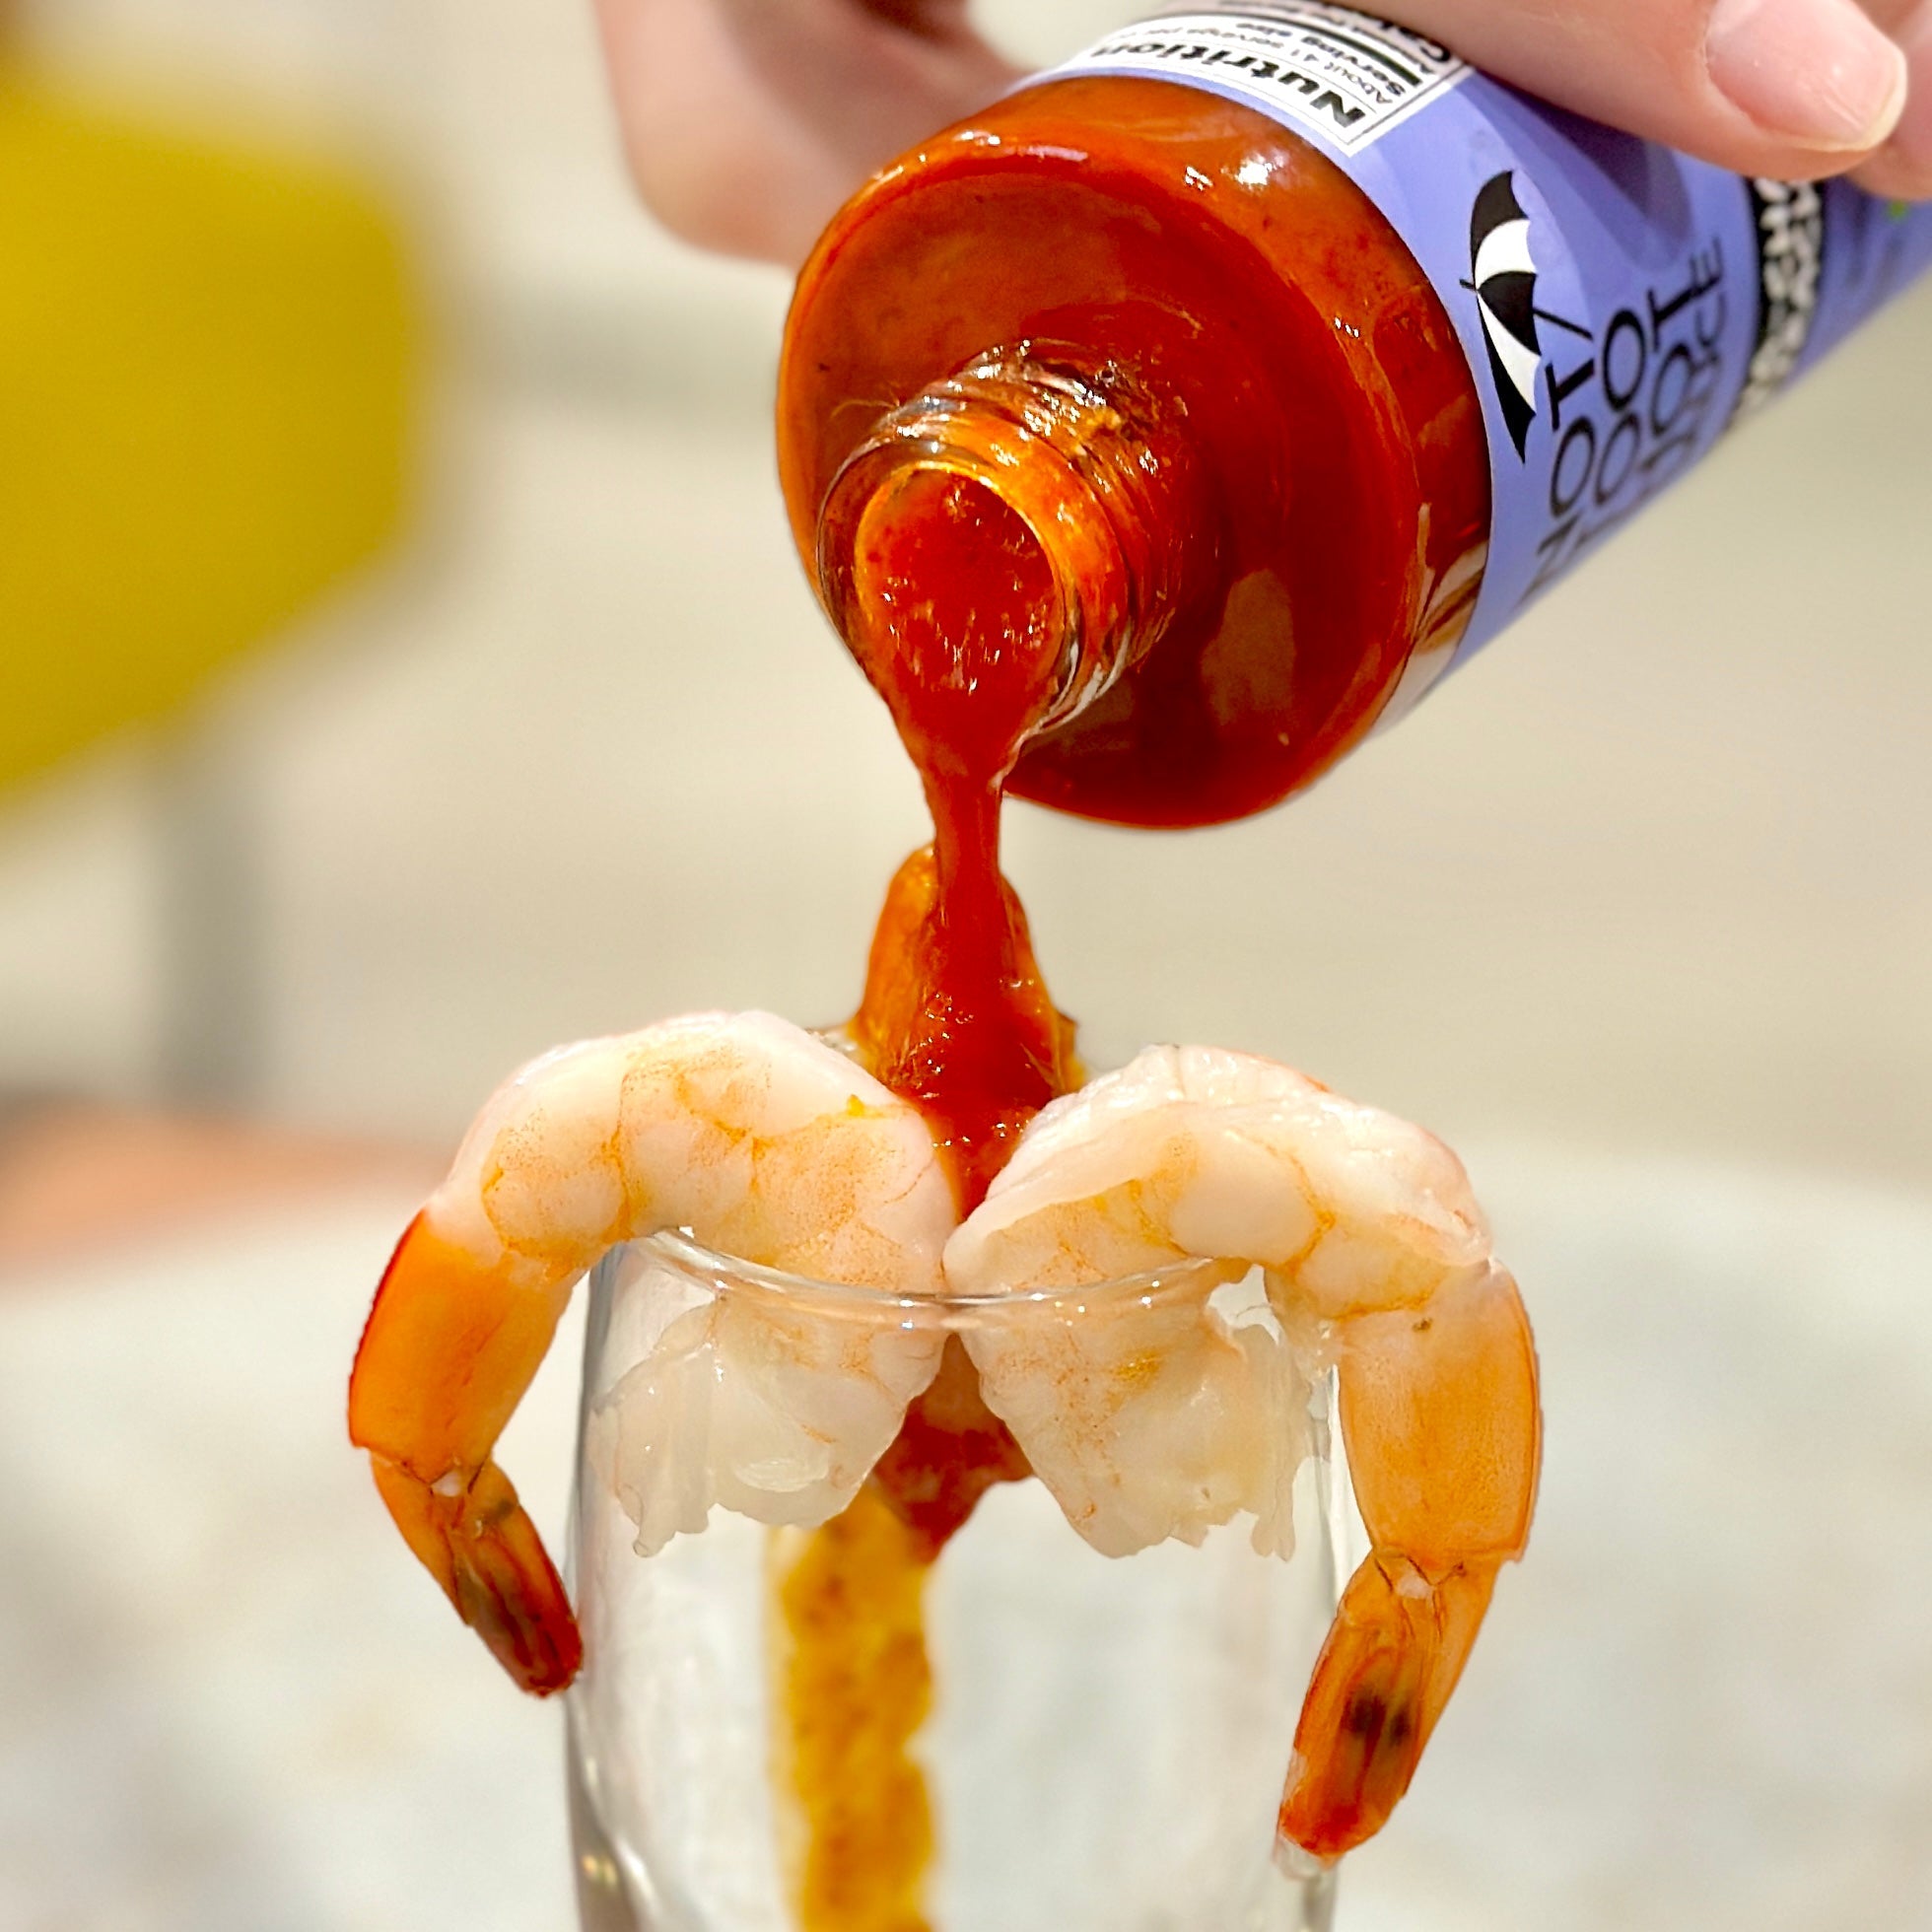 Sriracha Shrimp Cocktail Recipe with Hot Sauce